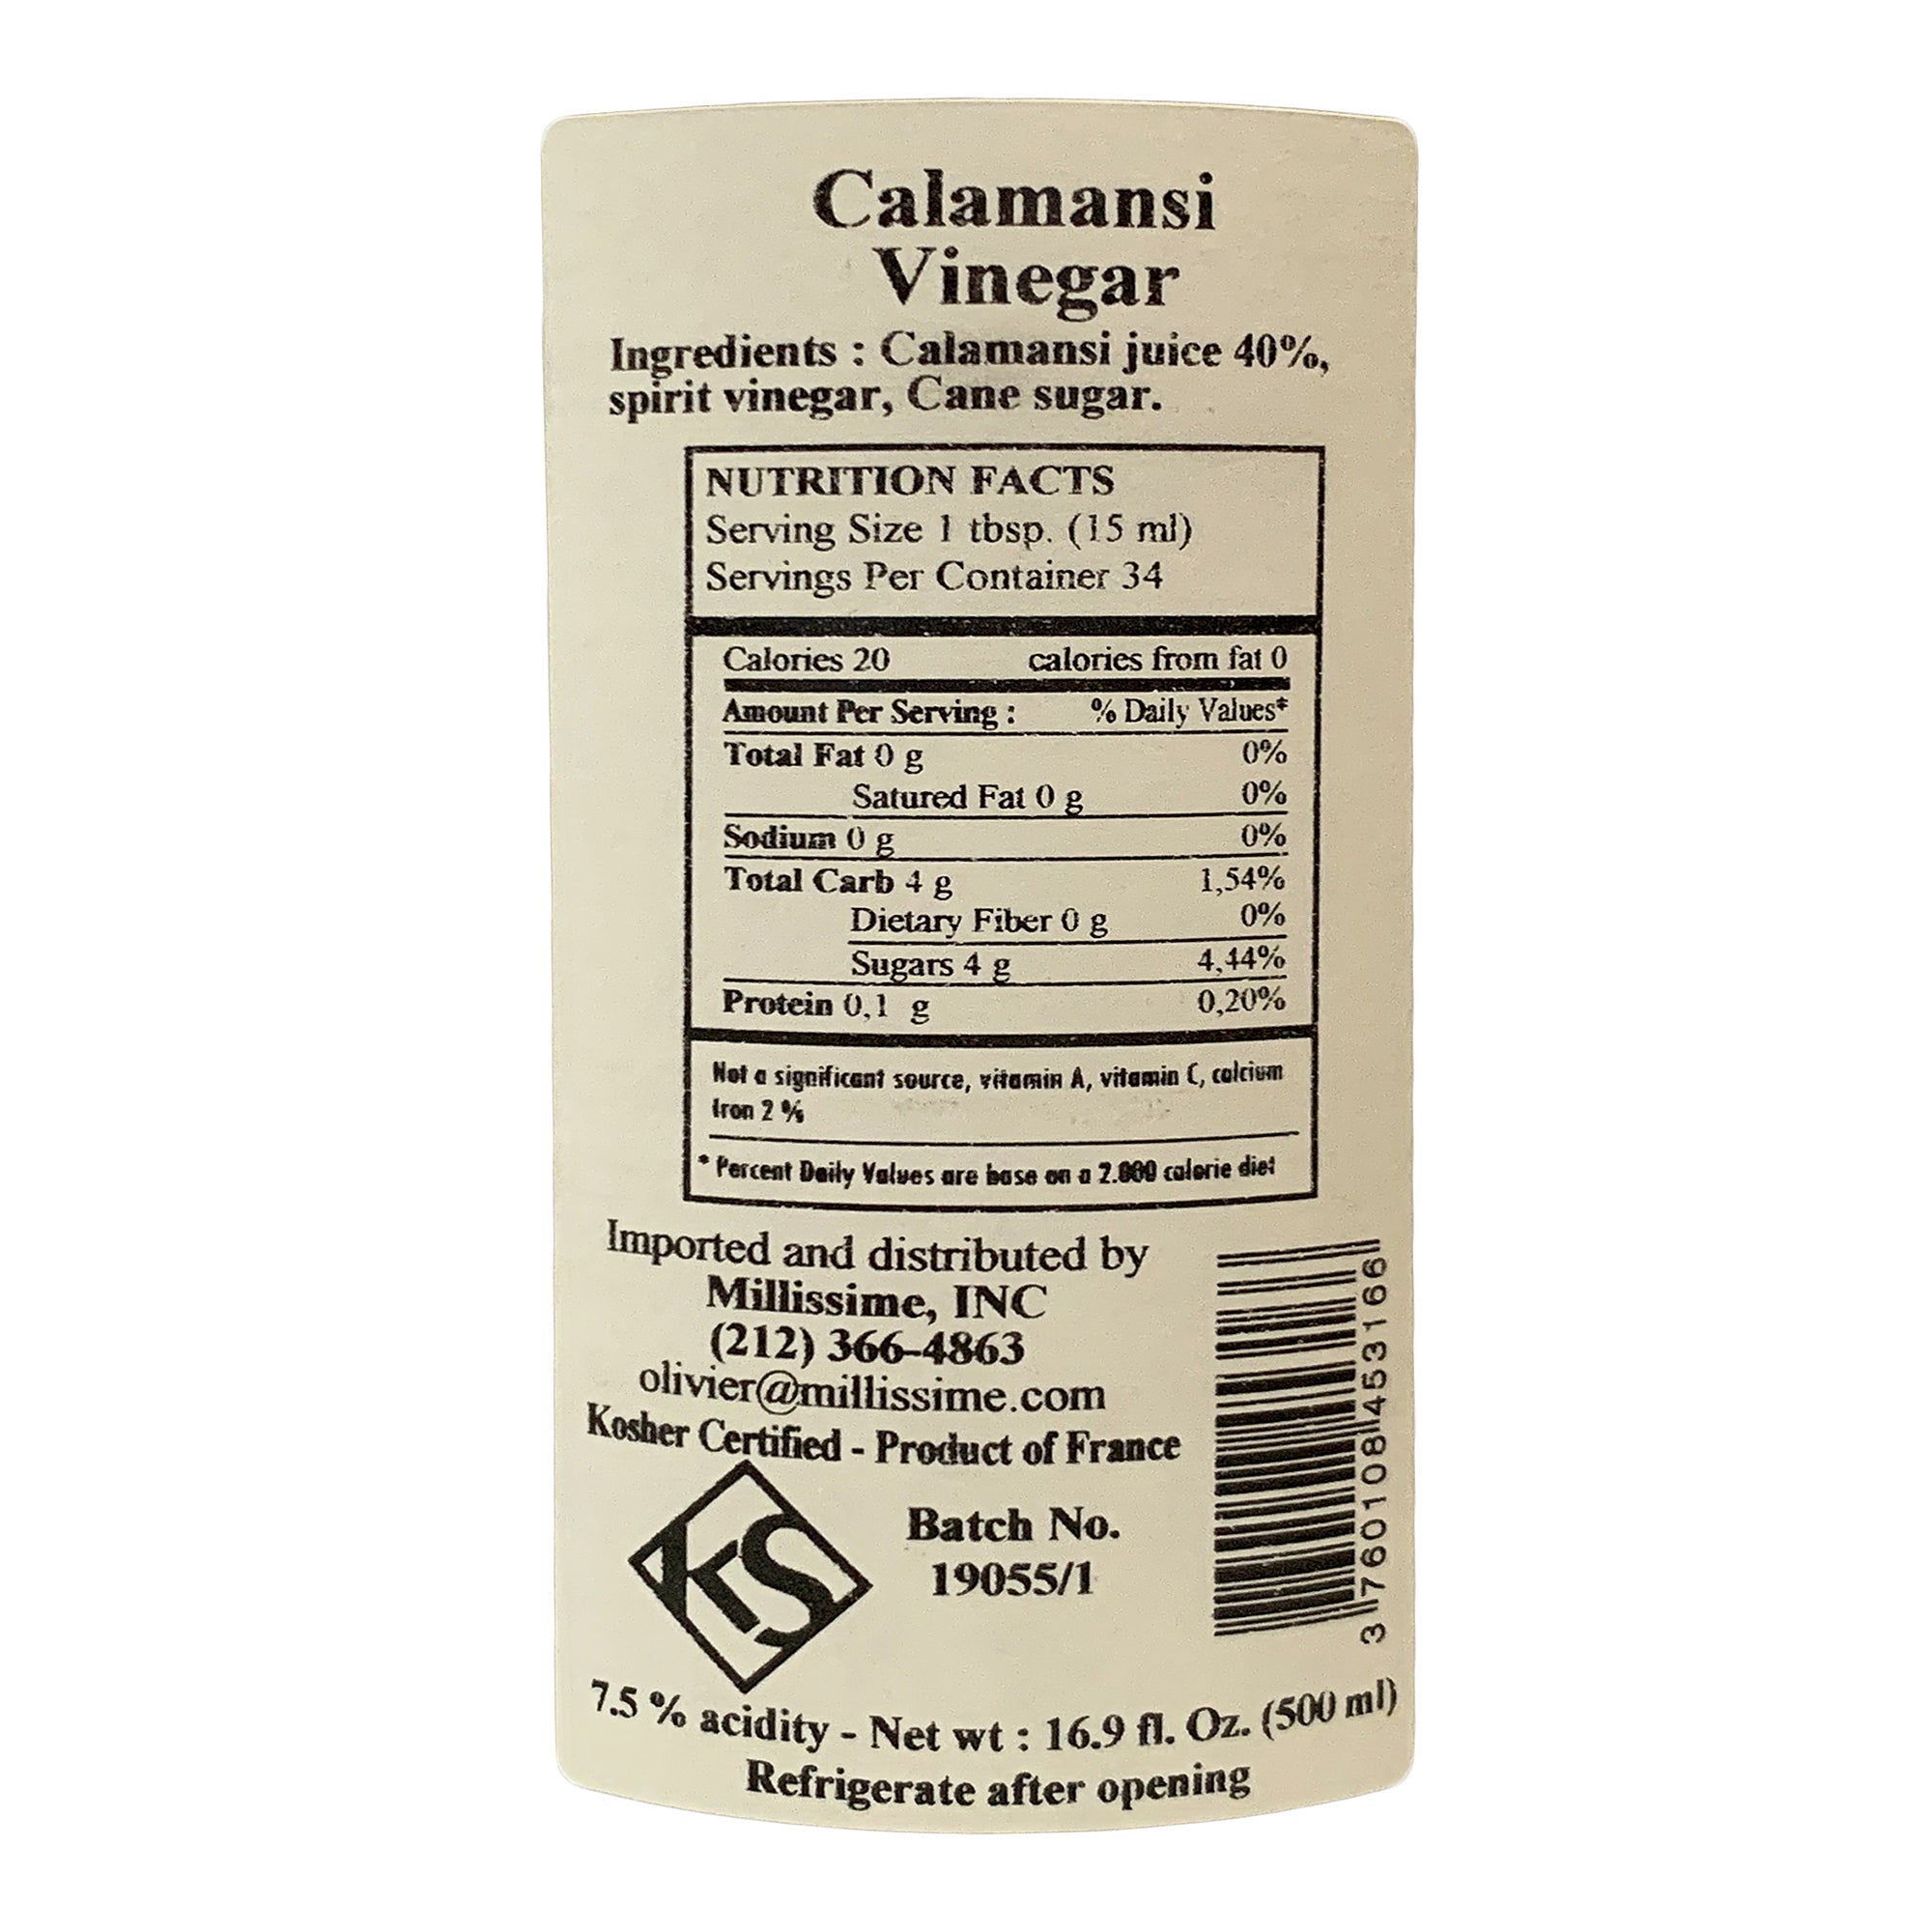 Huilerie Beaujolaise Calamansi Vinegar – The Curated Pantry